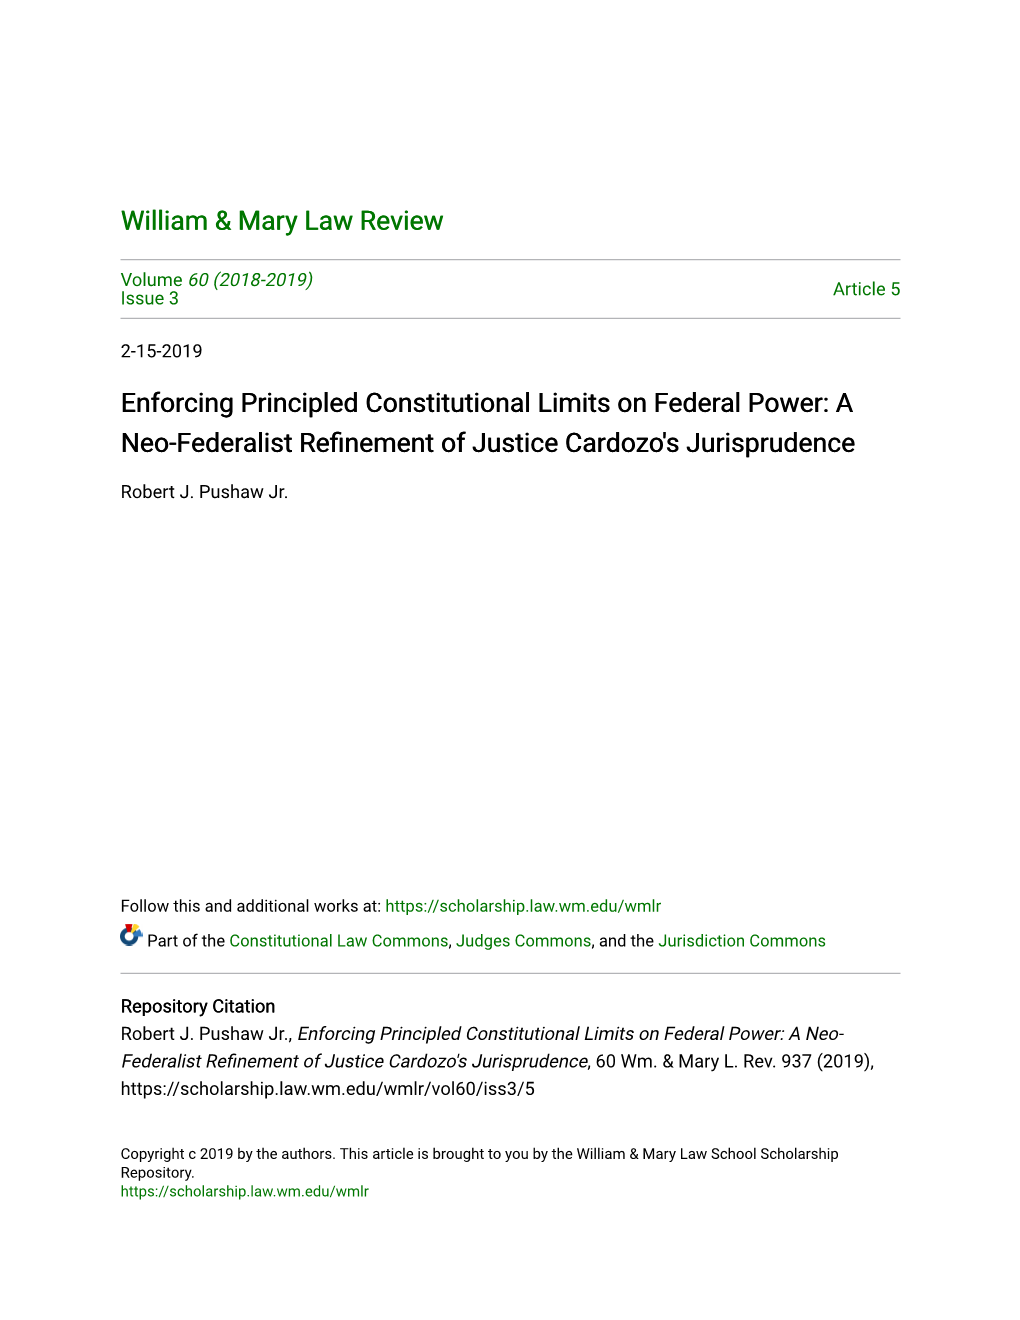 A Neo-Federalist Refinement of Justice Cardozo's Jurisprudence